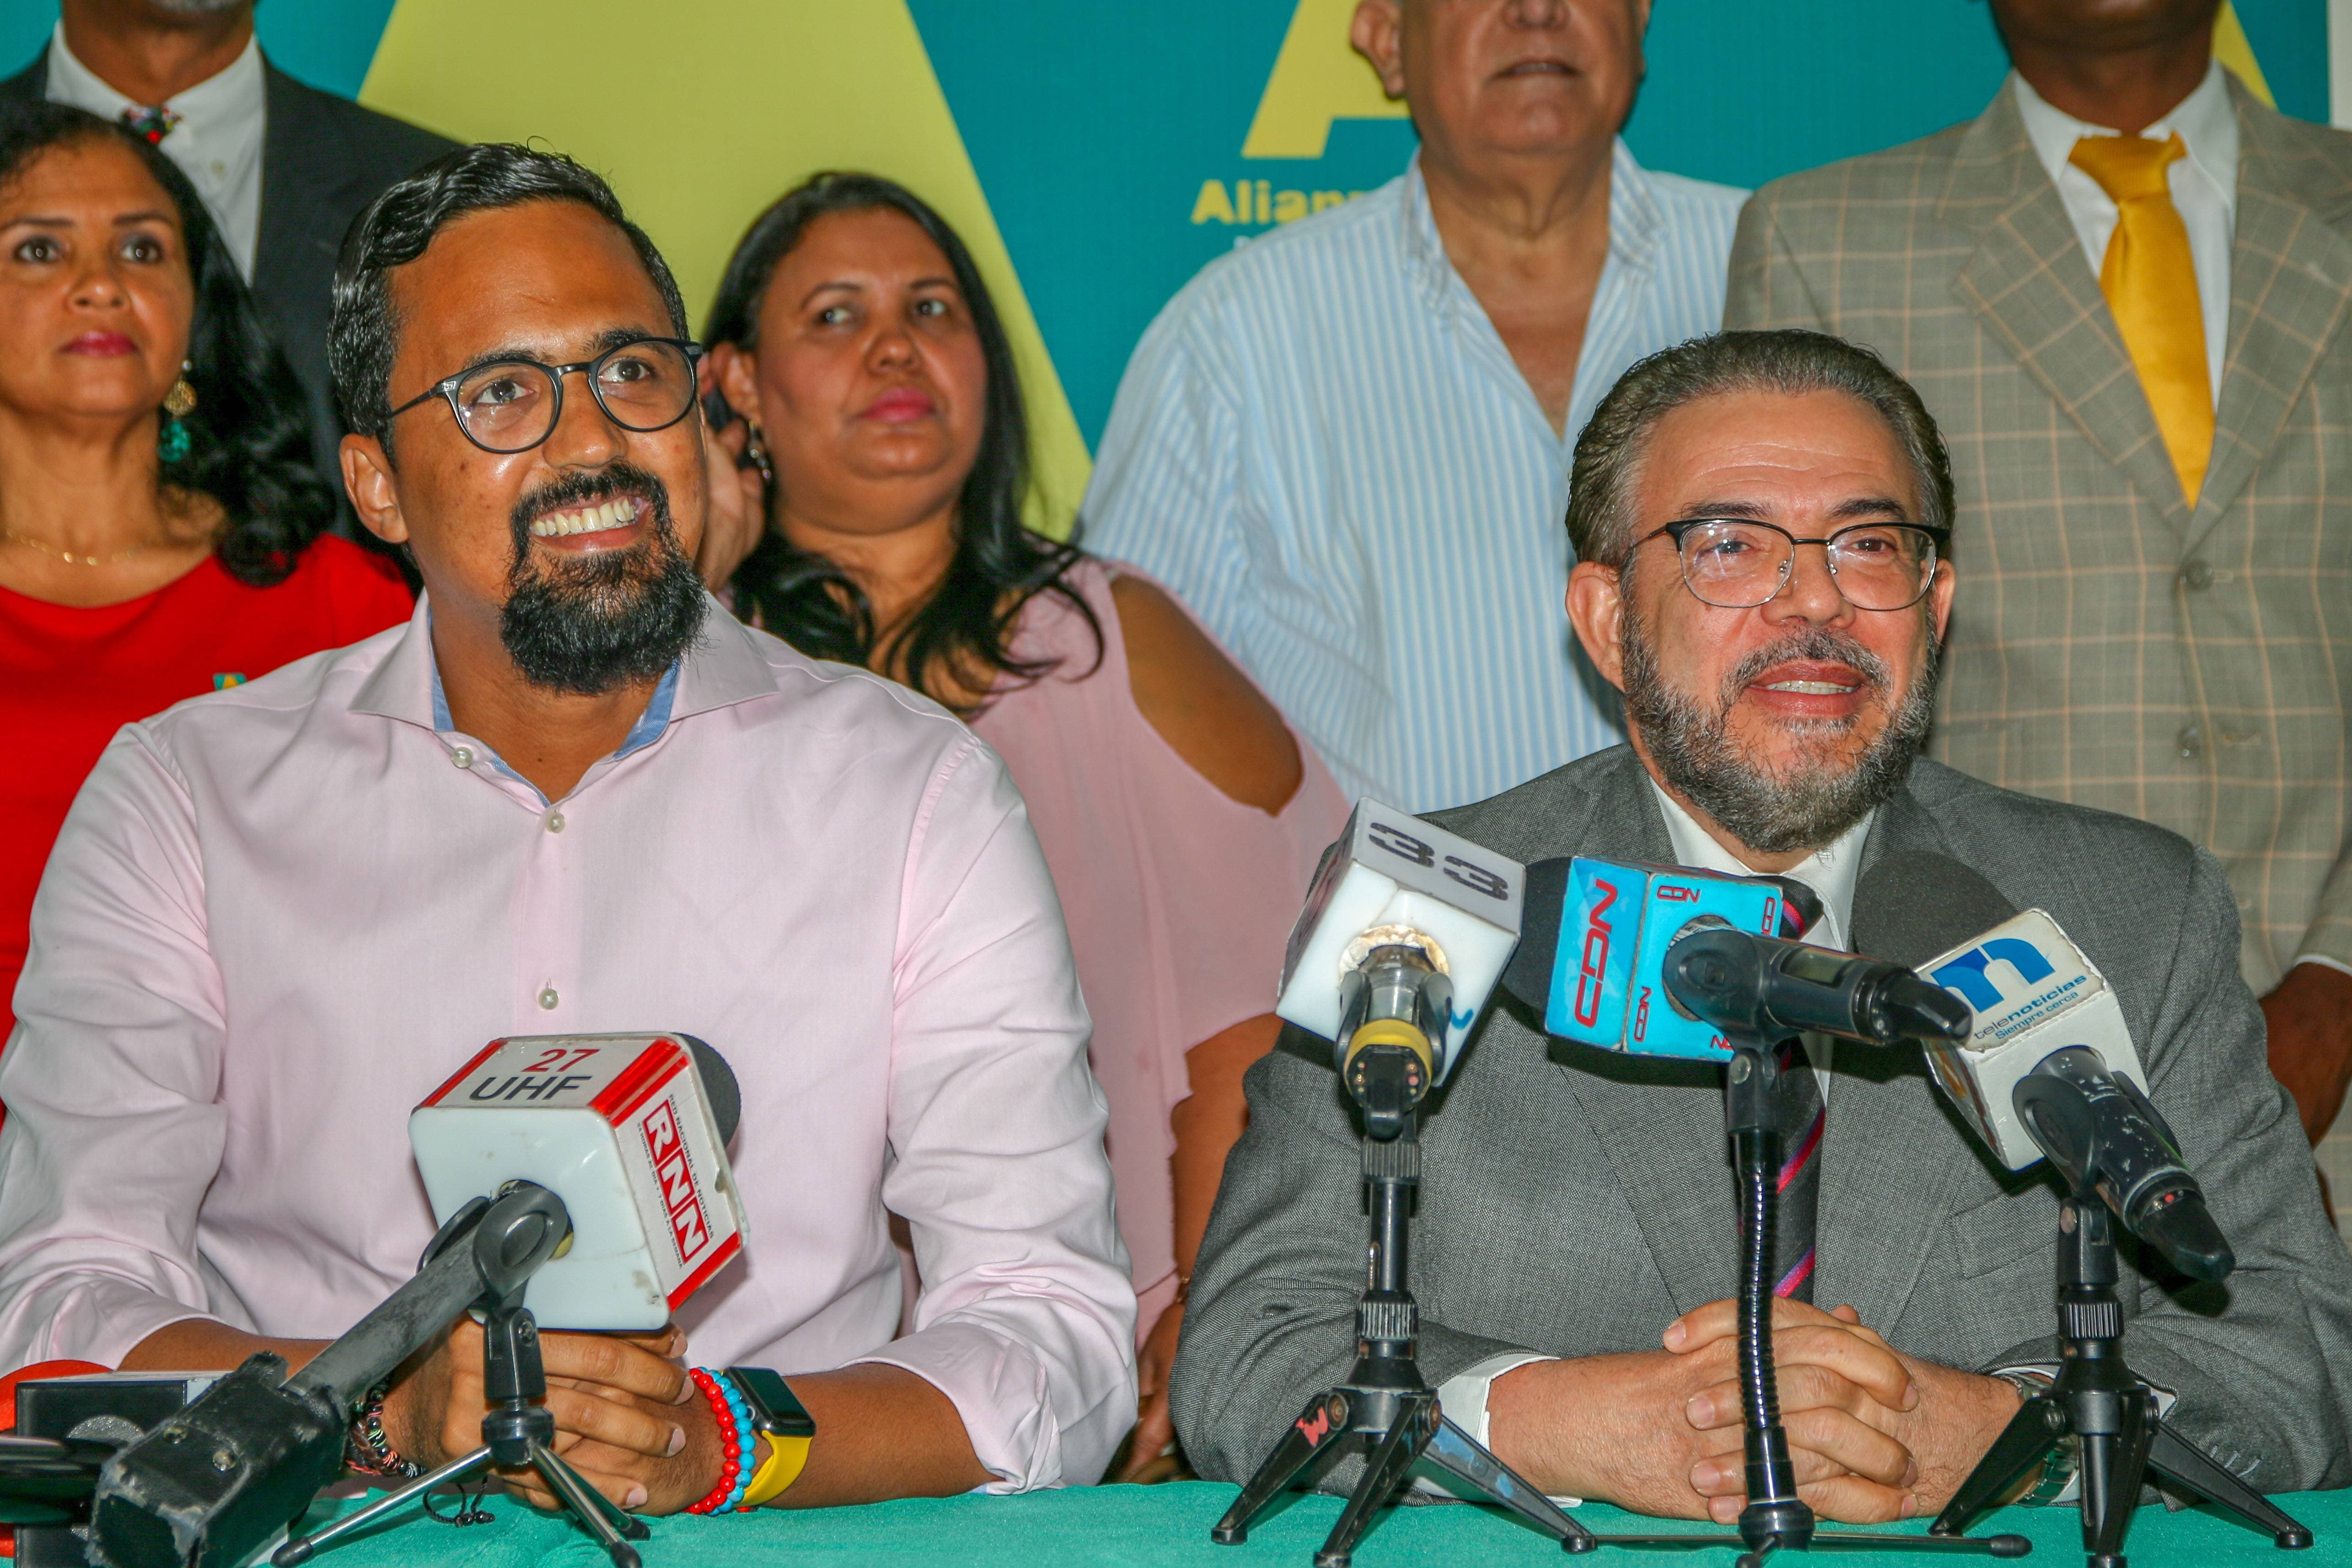 Alianza País presenta a Bartolomé Pujals como candidato a Alcalde del Distrito Nacional